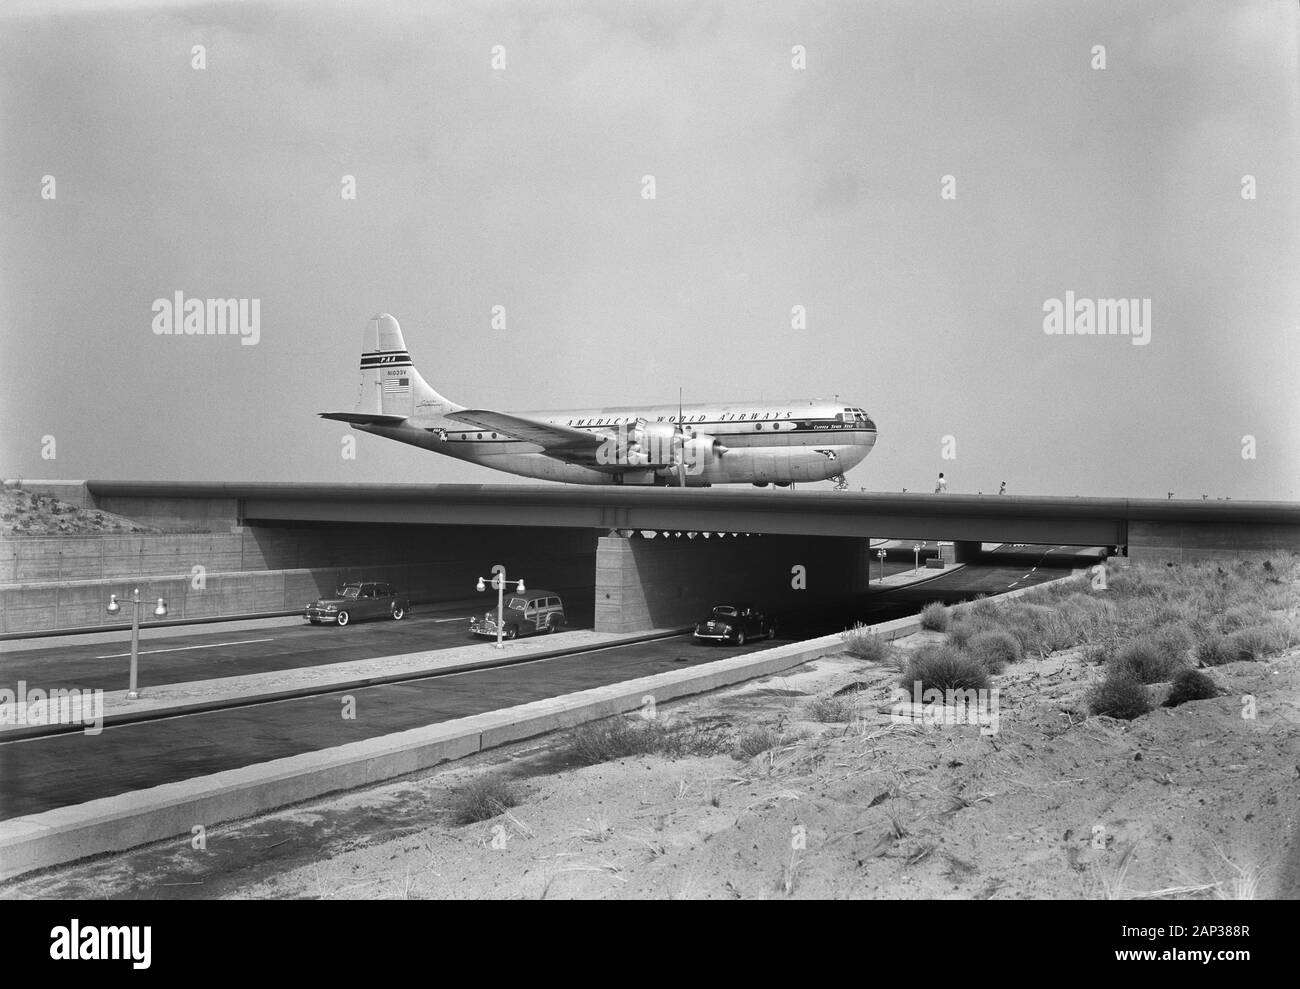 Aeroplano attraversando il ponte, Edoardo Vianello aeroporto, ora noto come John F. Kennedy International Airport, Queens, a New York, USA, fotografia di Gottscho-Schleisner, Agosto 1949 Foto Stock